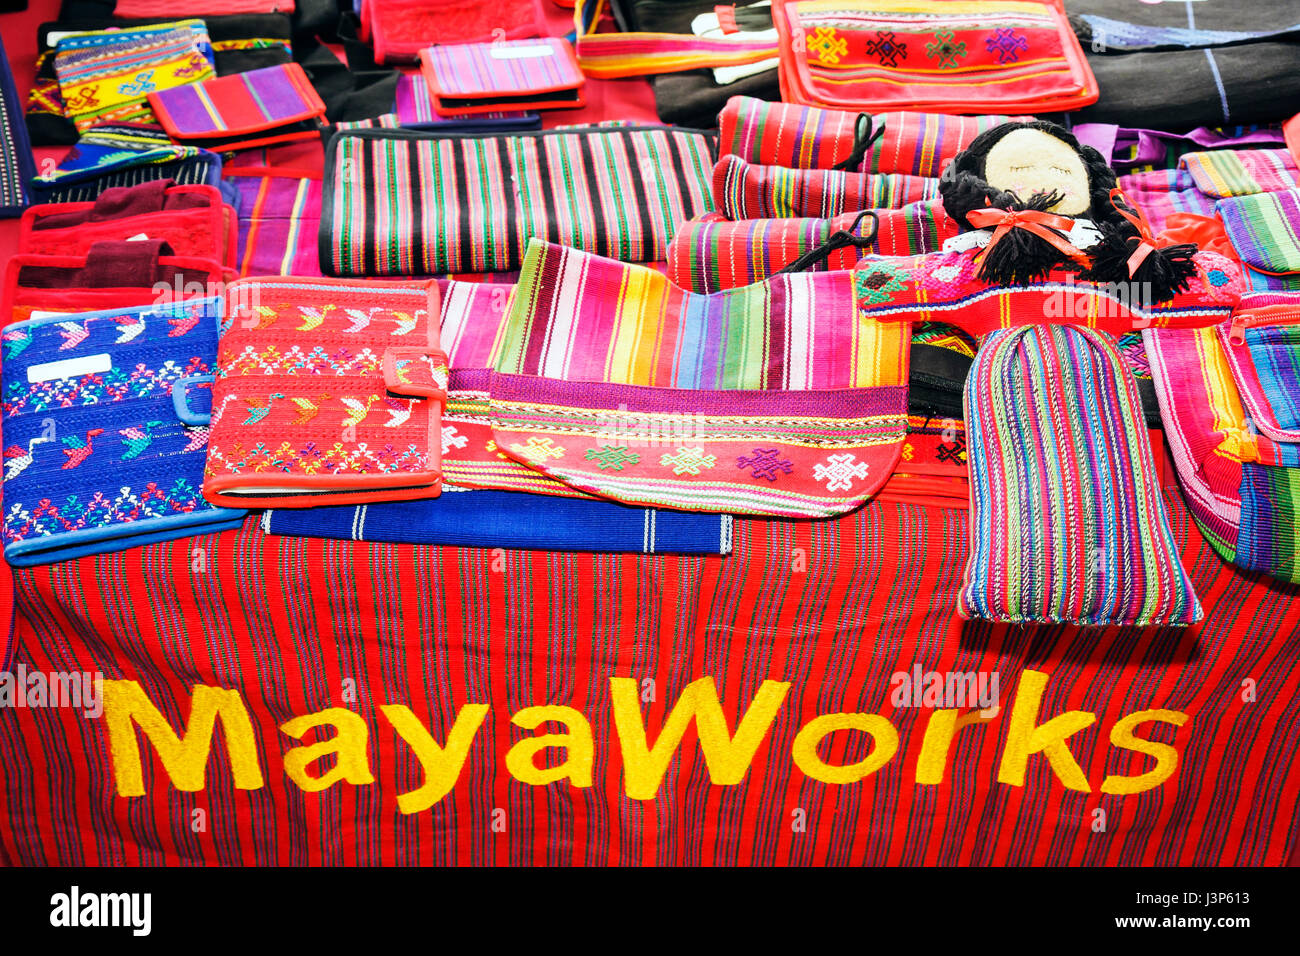 Miami Beach Florida,Fair Trade Bazaar,handicrafts crafts Mayan Guatemalan colorful,textiles embroidery doll dolls,display sale MayaWorks import import Stock Photo